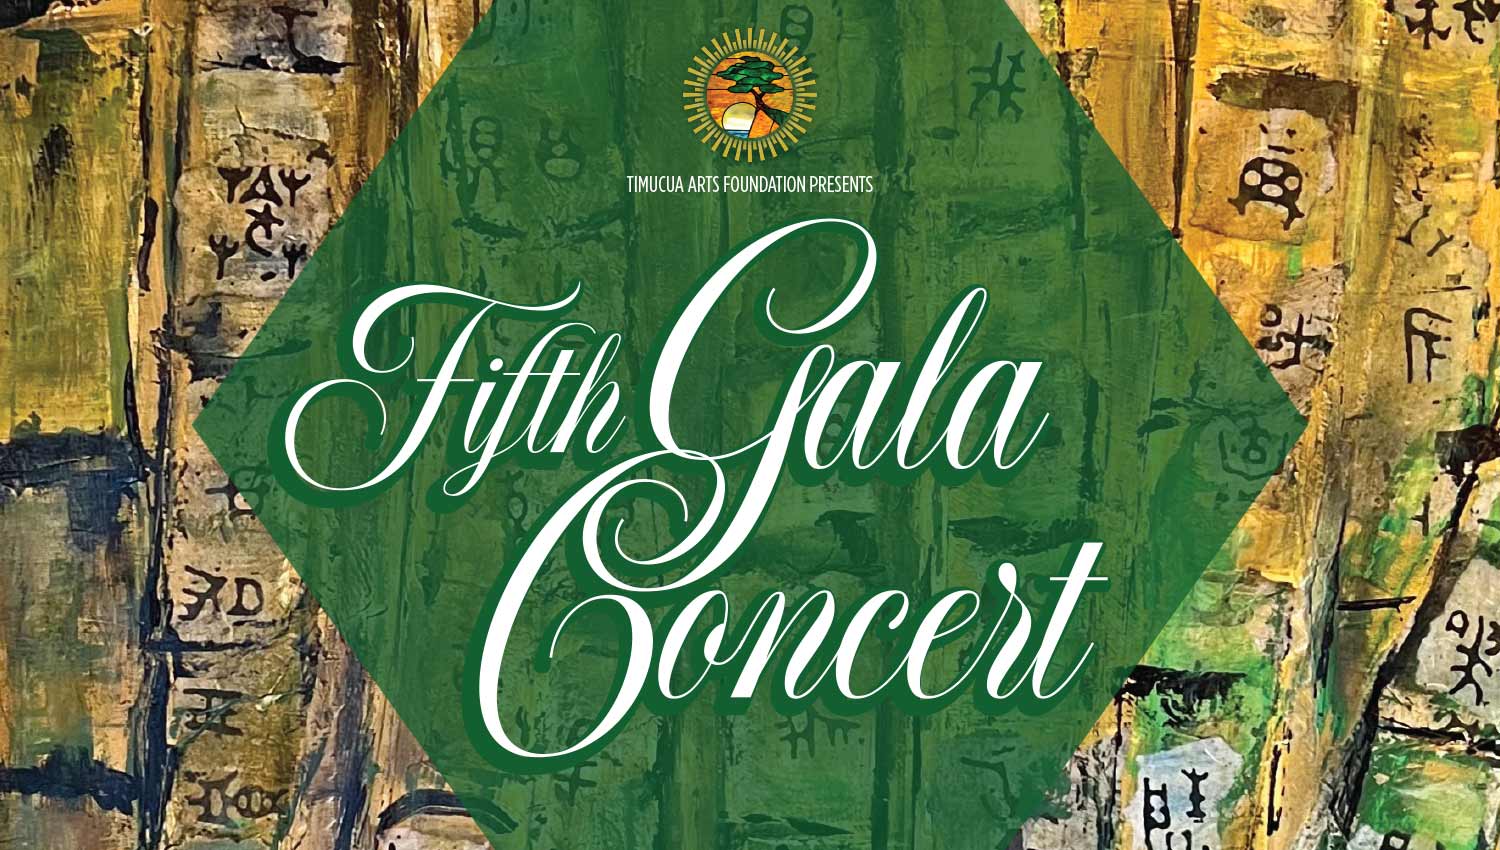 Timucua Arts Foundation presents International Guitar Festival